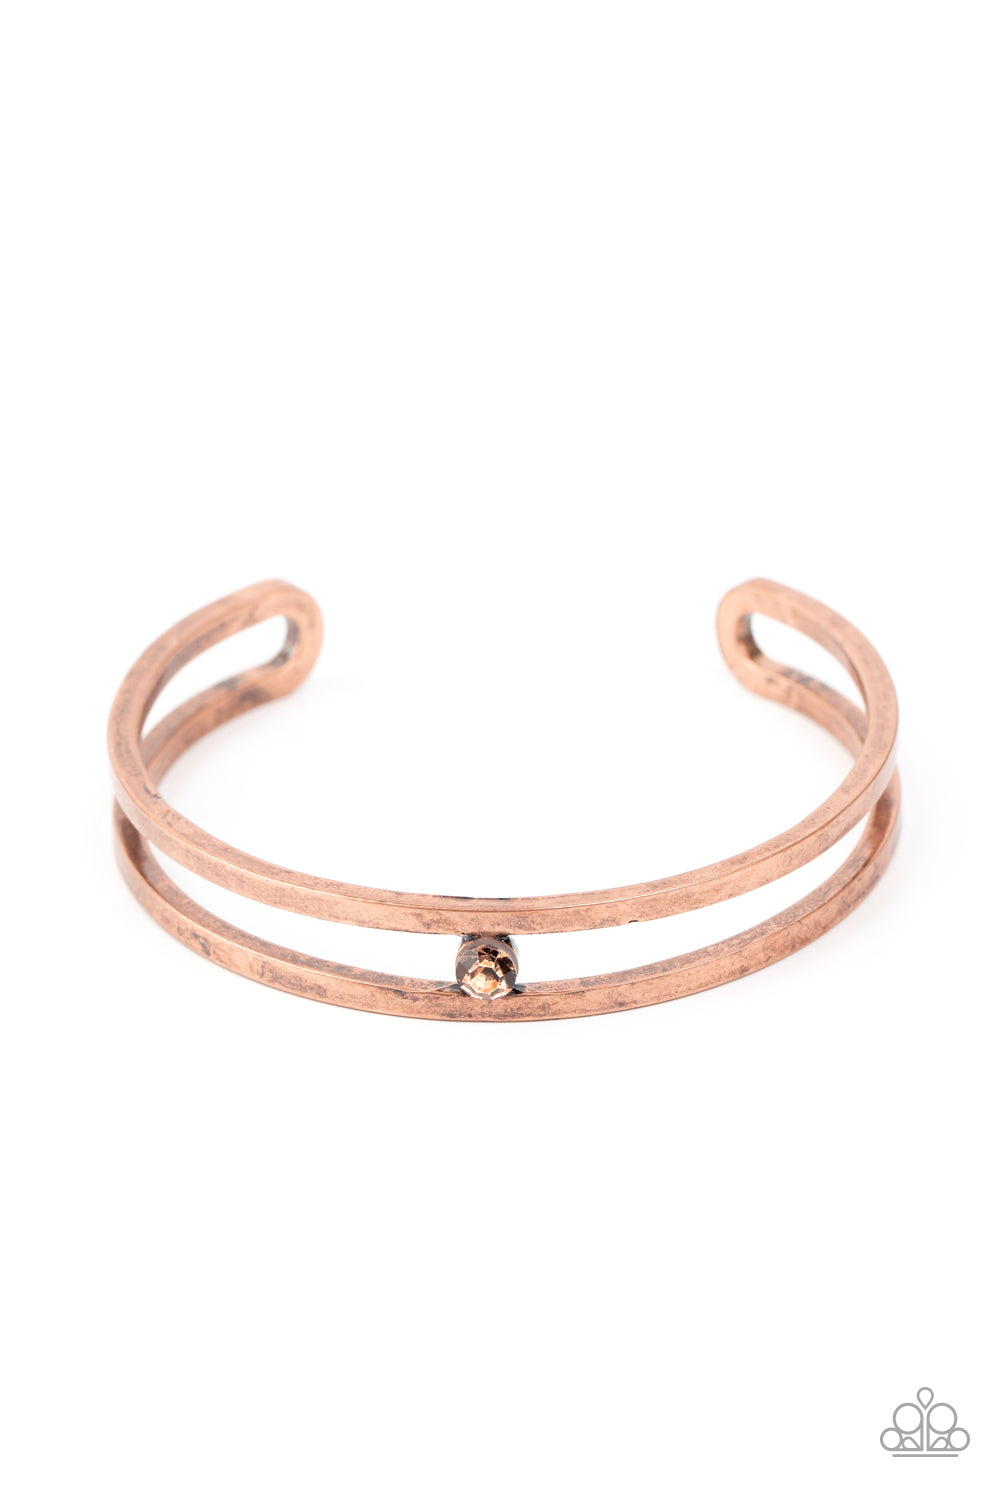 Solo Artist - Copper cuff bracelet 1647